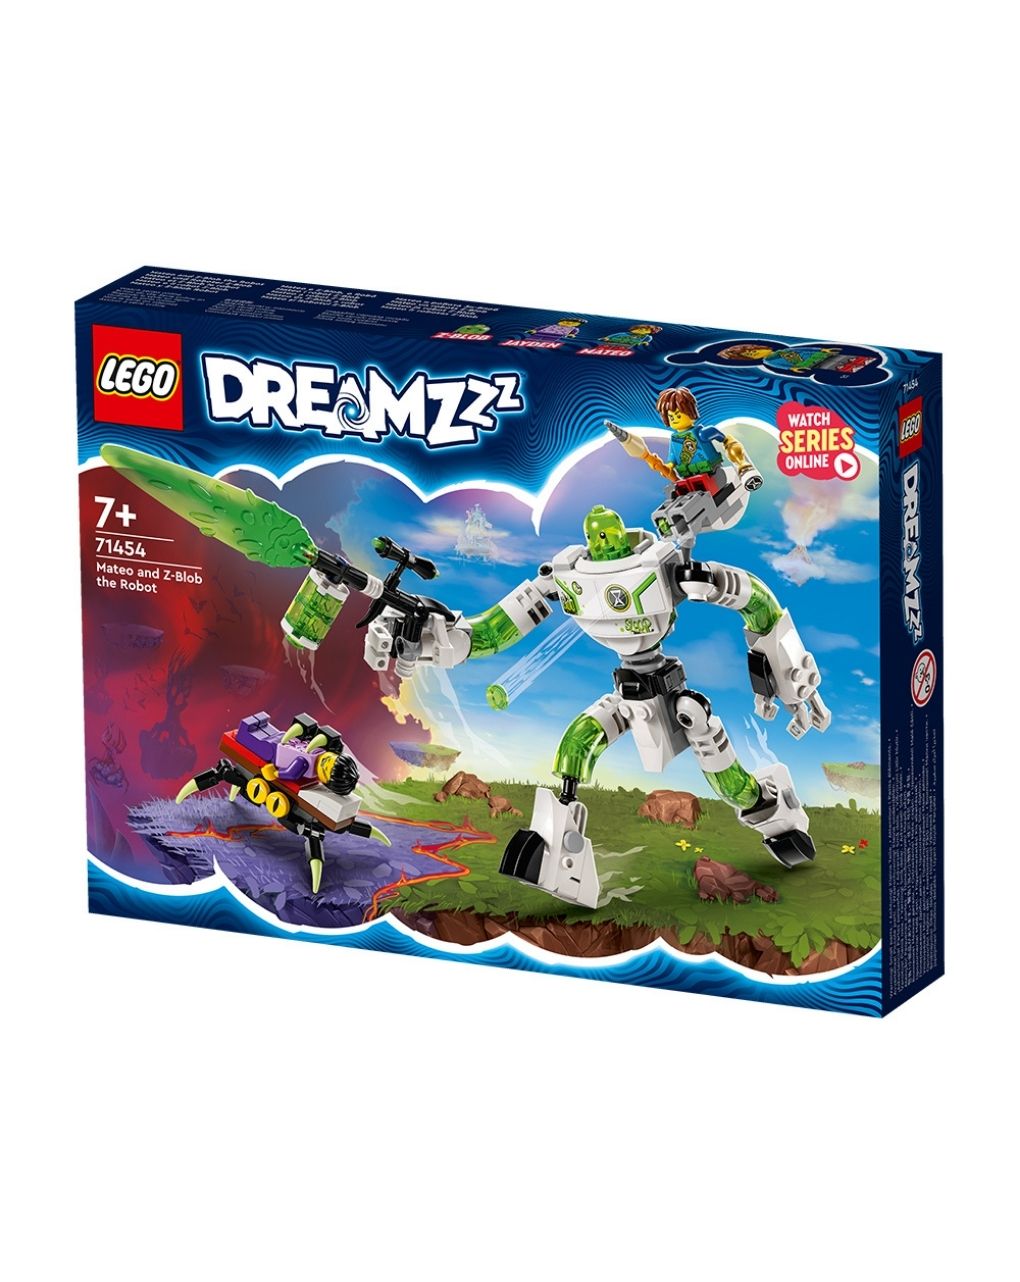 Lego dreamzzz mateo και z-blob το ρομπότ 71454